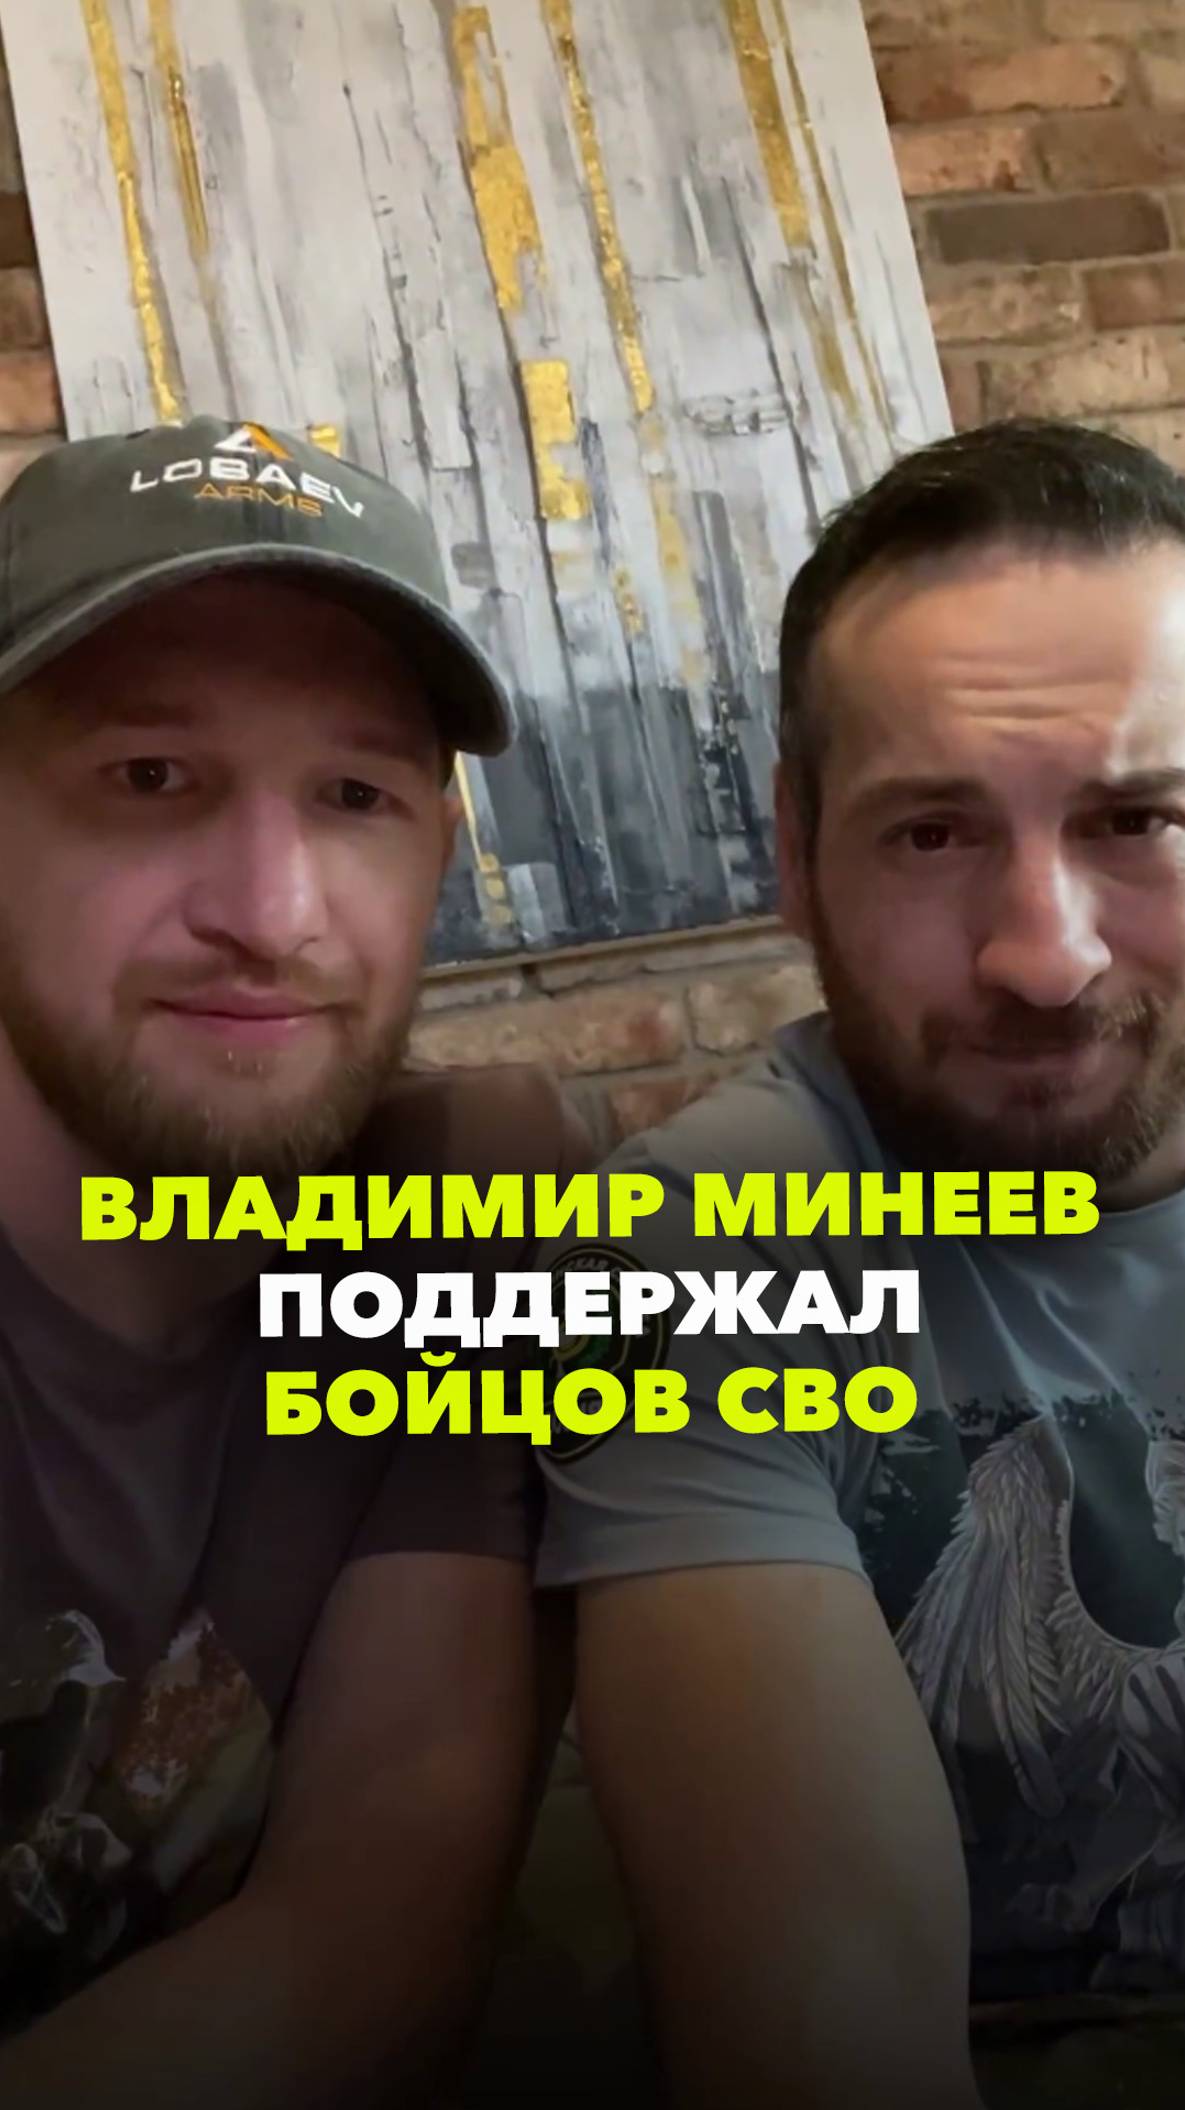 «Братишкам спасибо! Победа будет за нами»: Минеев поддержал бойцов СВО